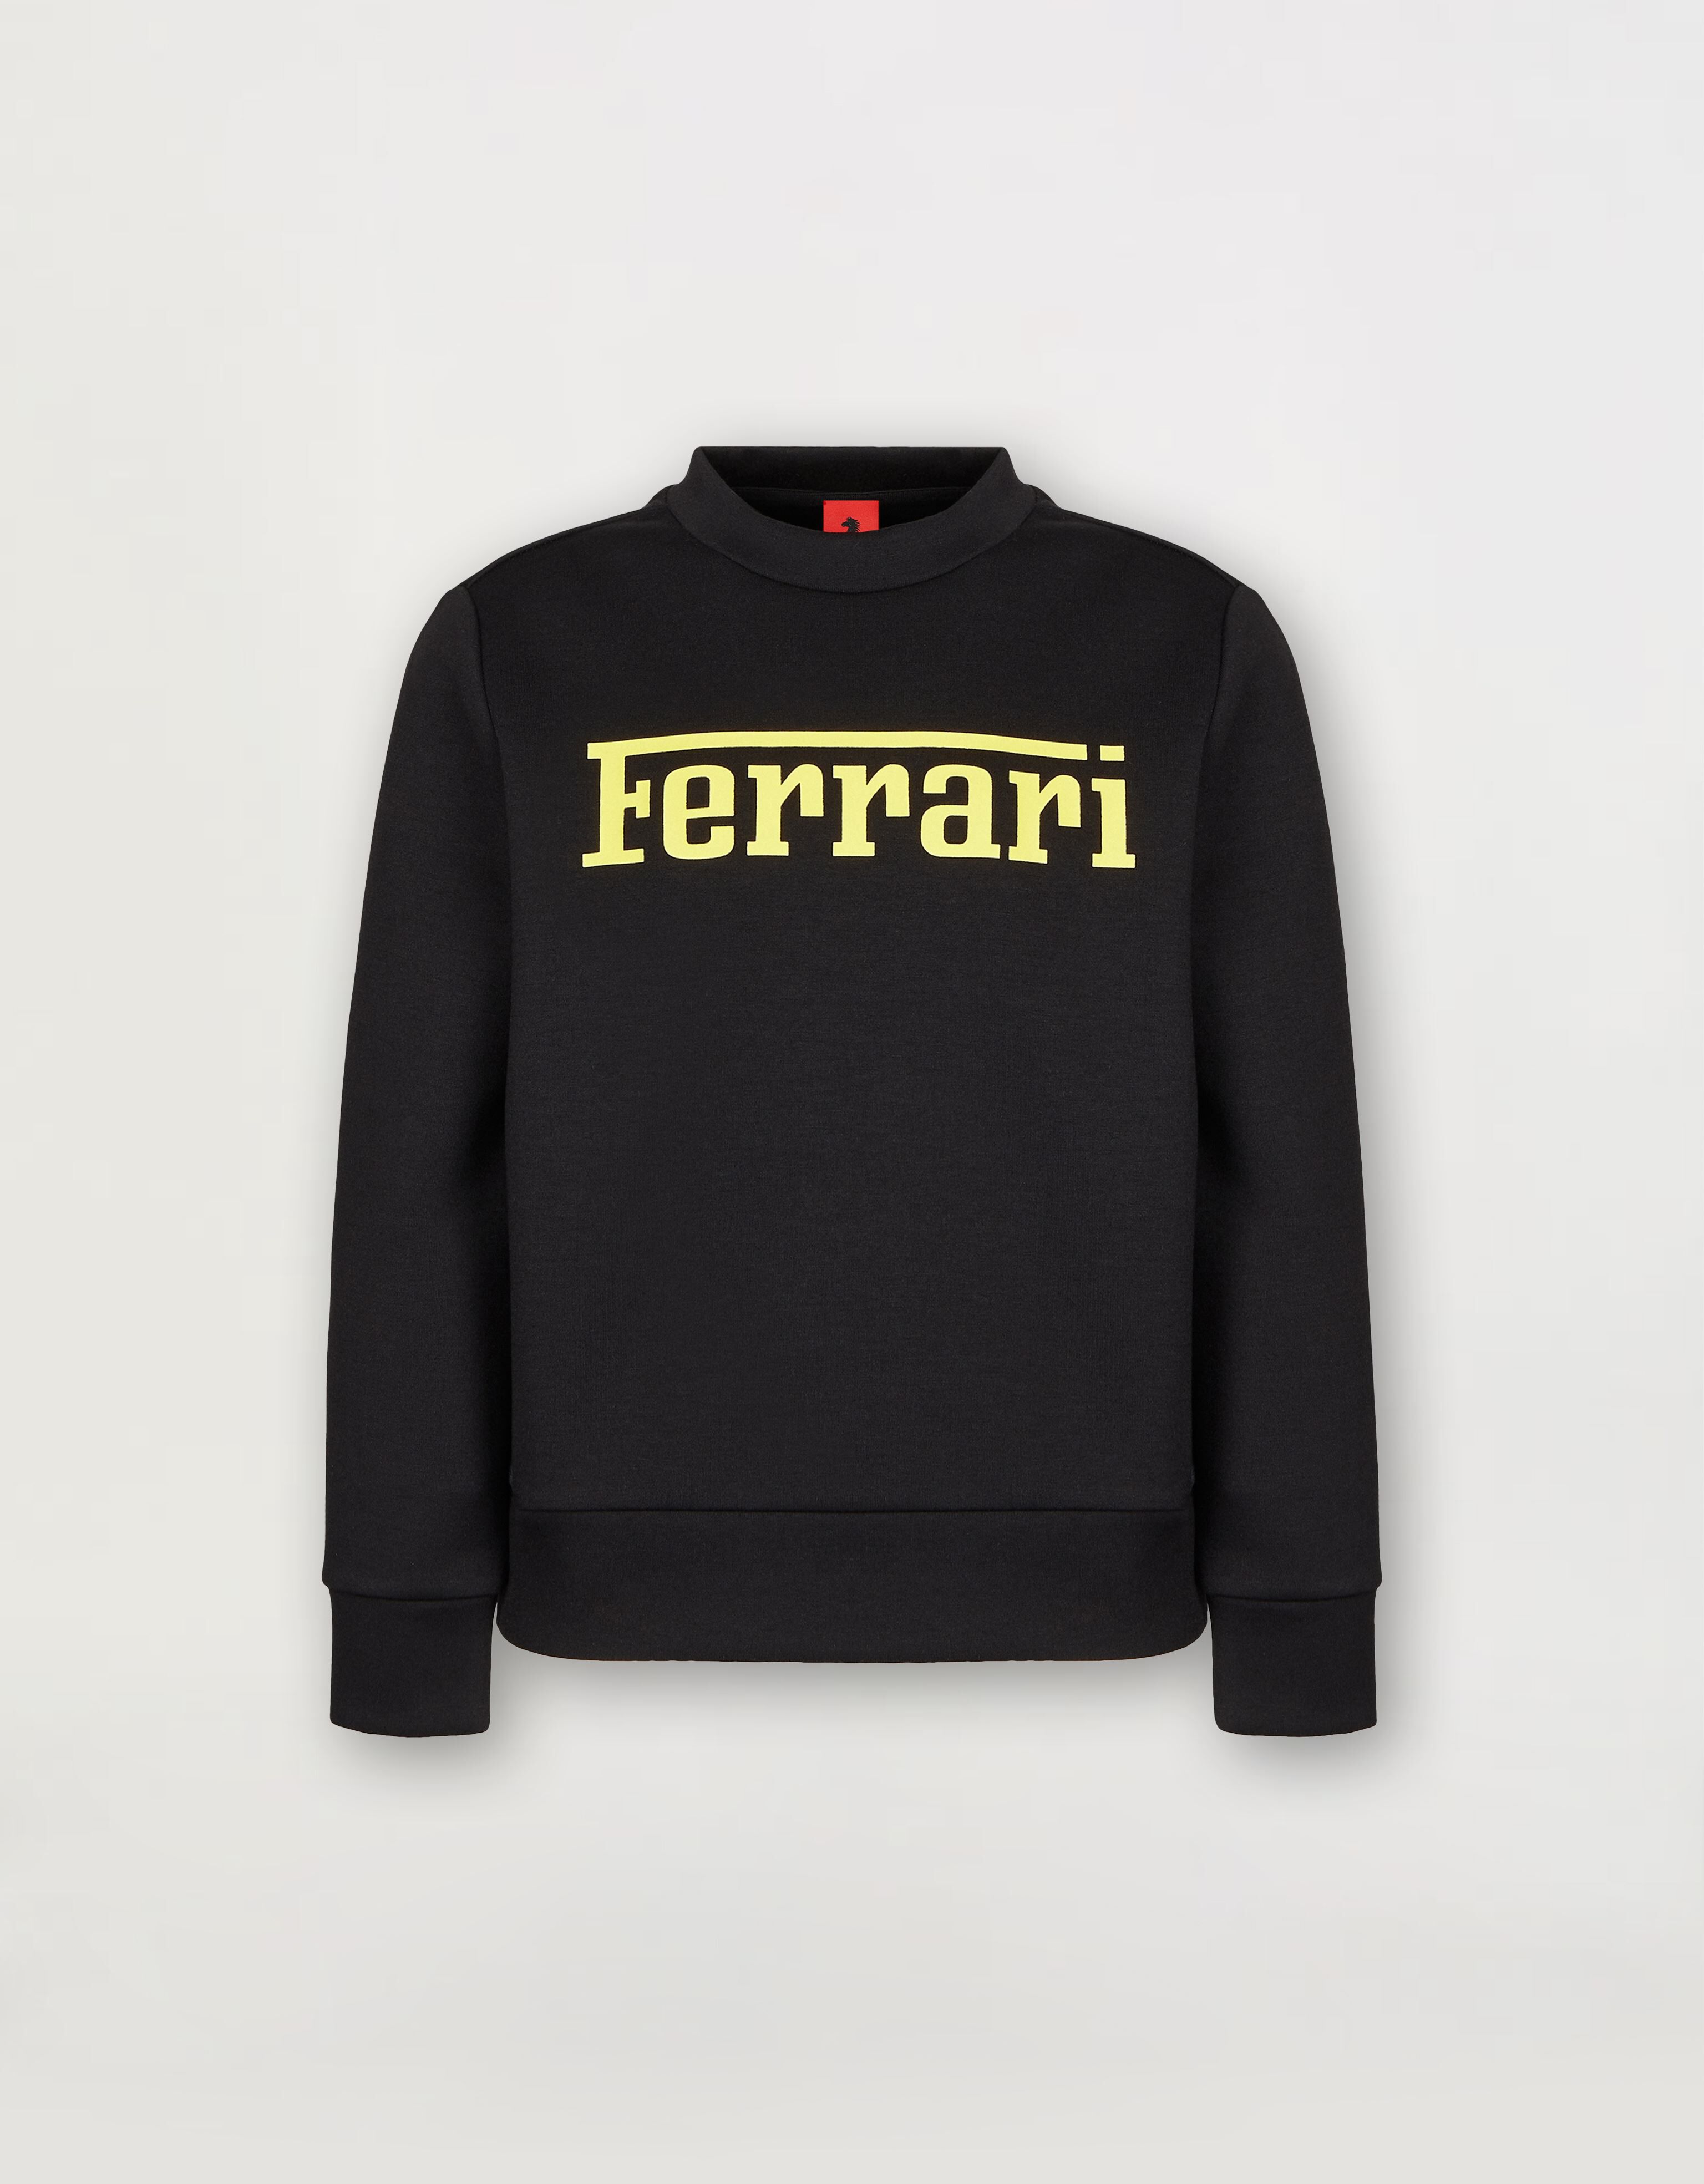 Ferrari Children’s sweatshirt in recycled scuba fabric with large Ferrari logo 黑色 46994fK